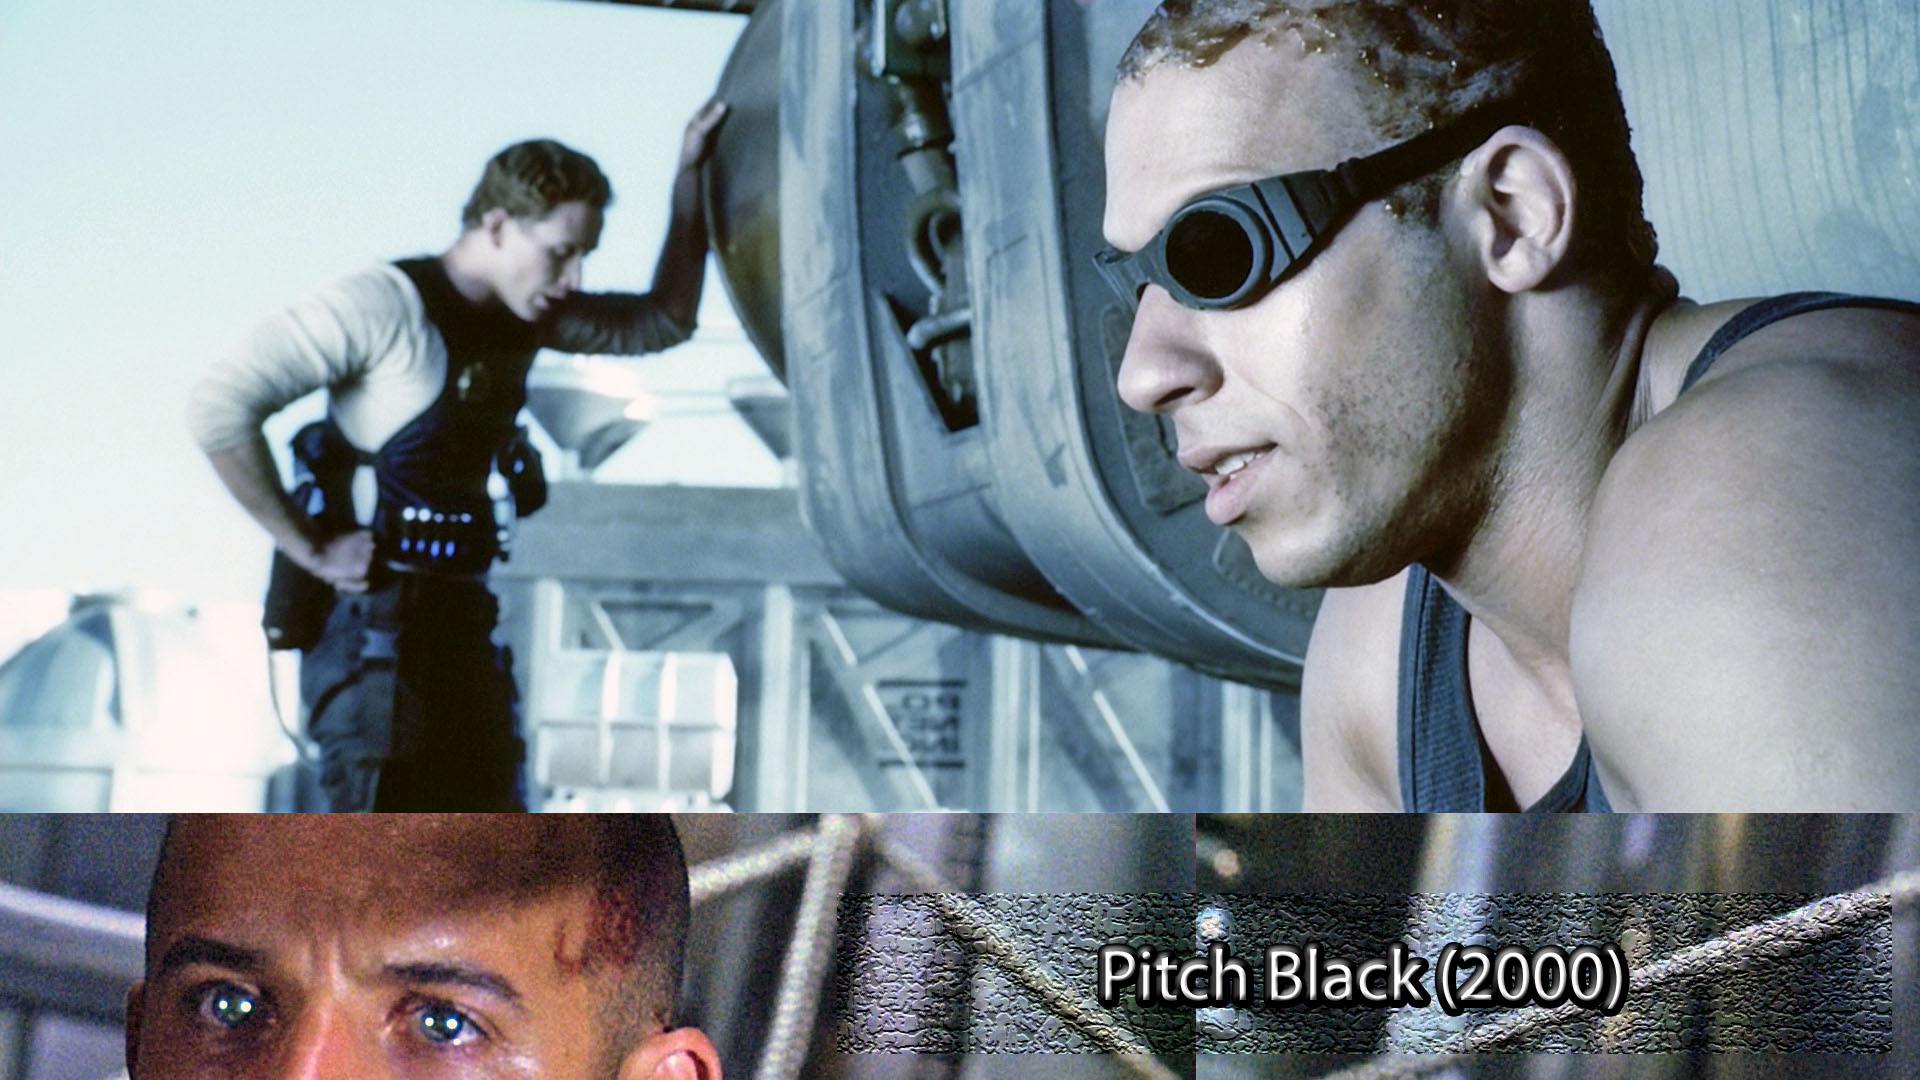 Pitch Black 2000 - Movies Wallpaper 35469647 - Fanpop